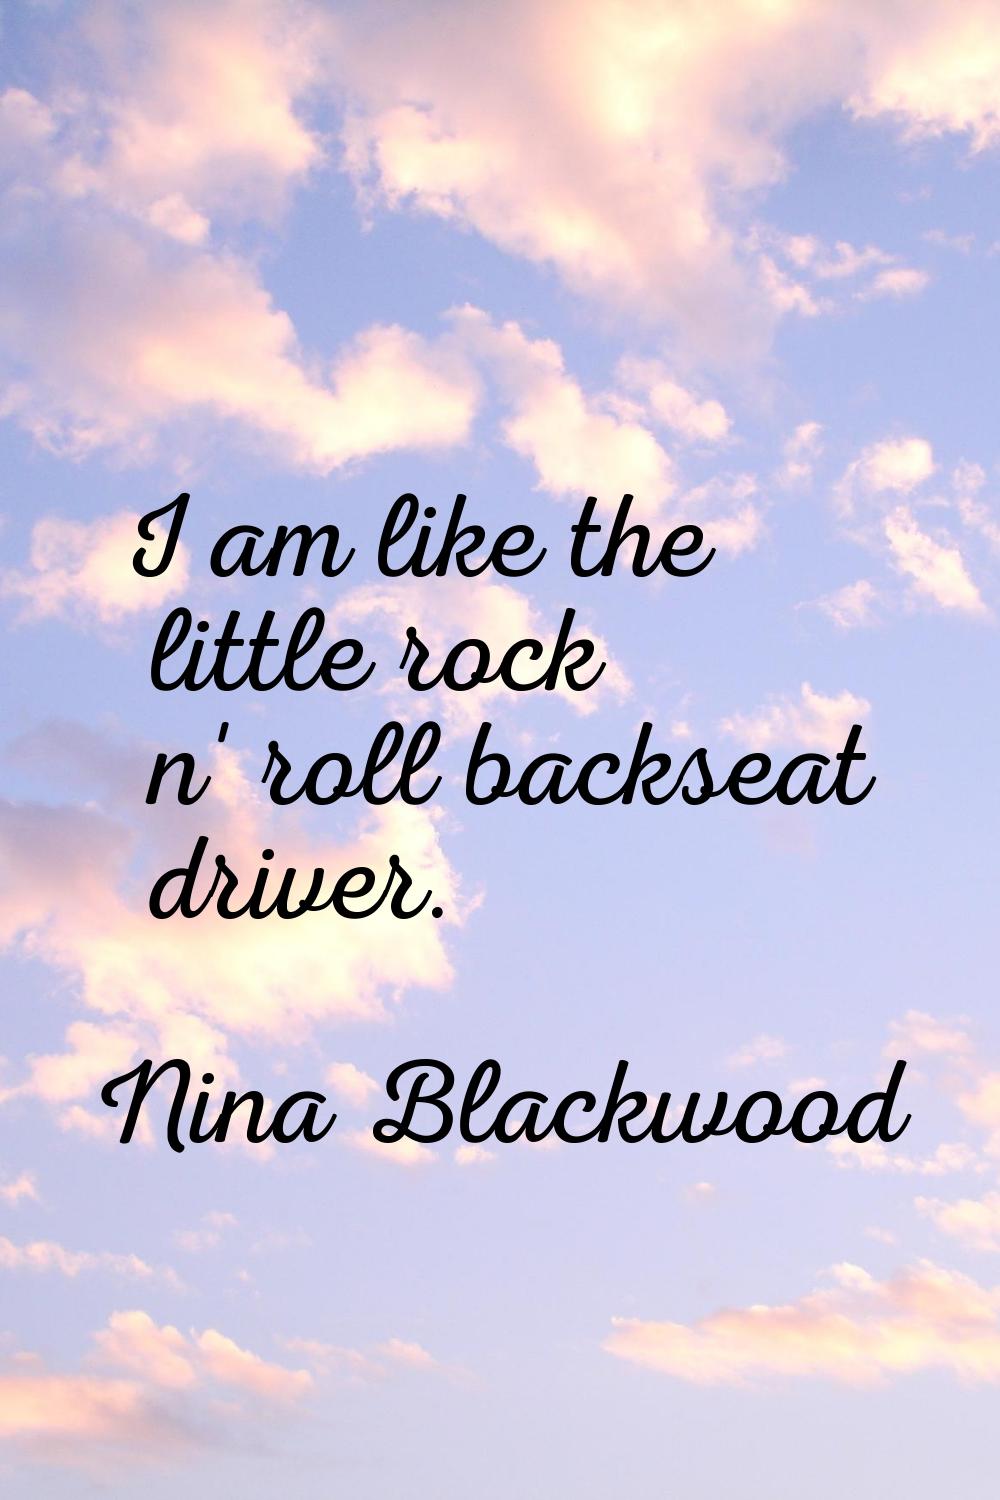 I am like the little rock n' roll backseat driver.